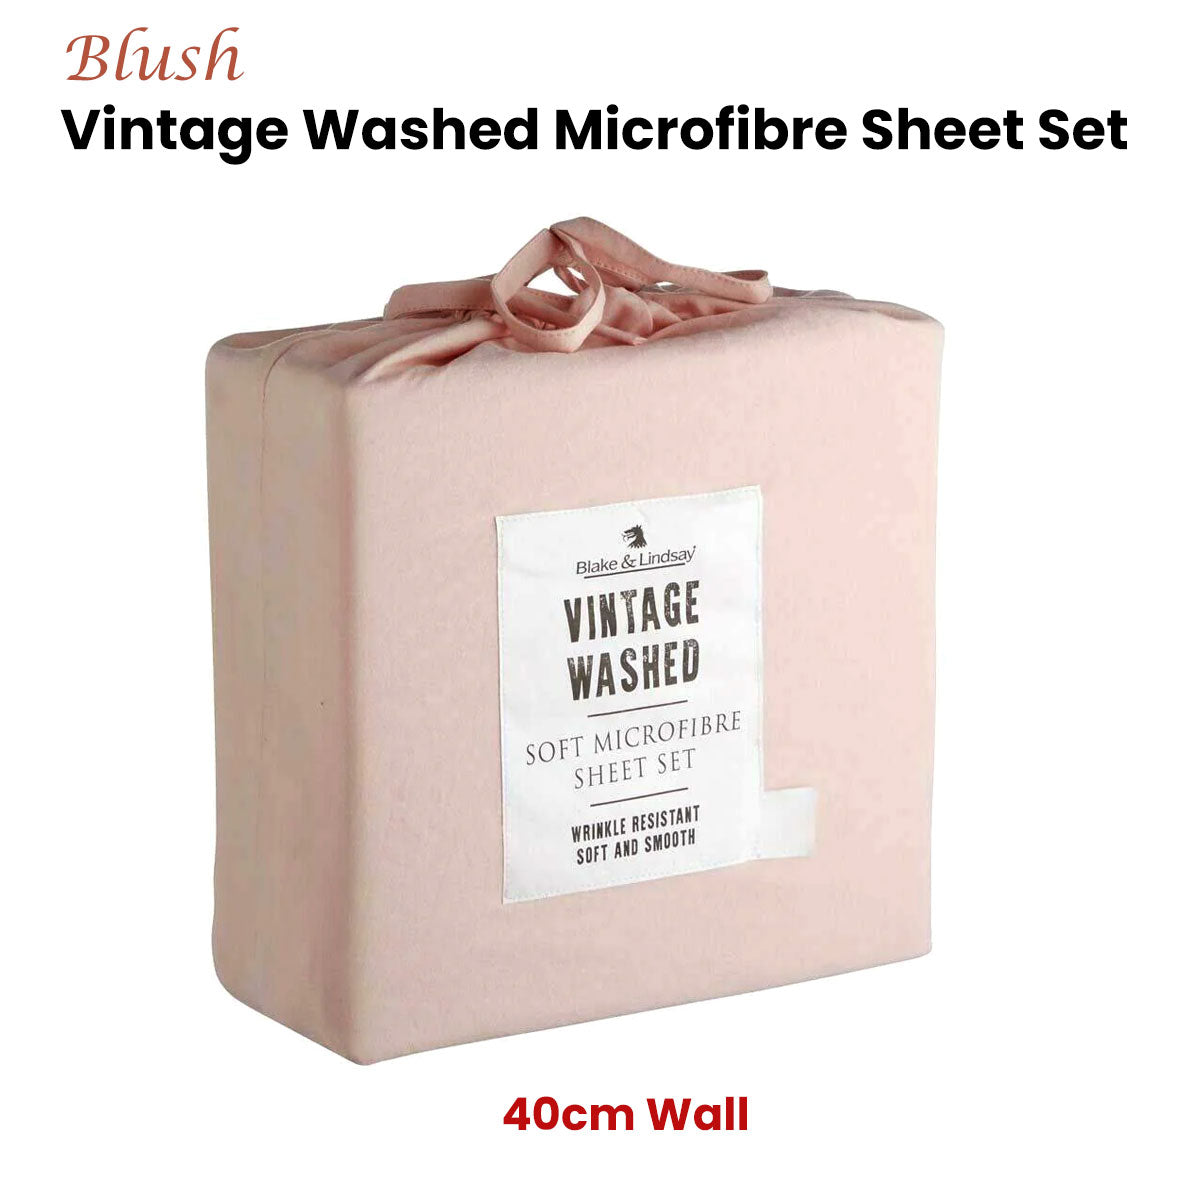 Blake & Lindsay Blush Vintage Washed Microfibre Sheet Set 40cm Wall King Single